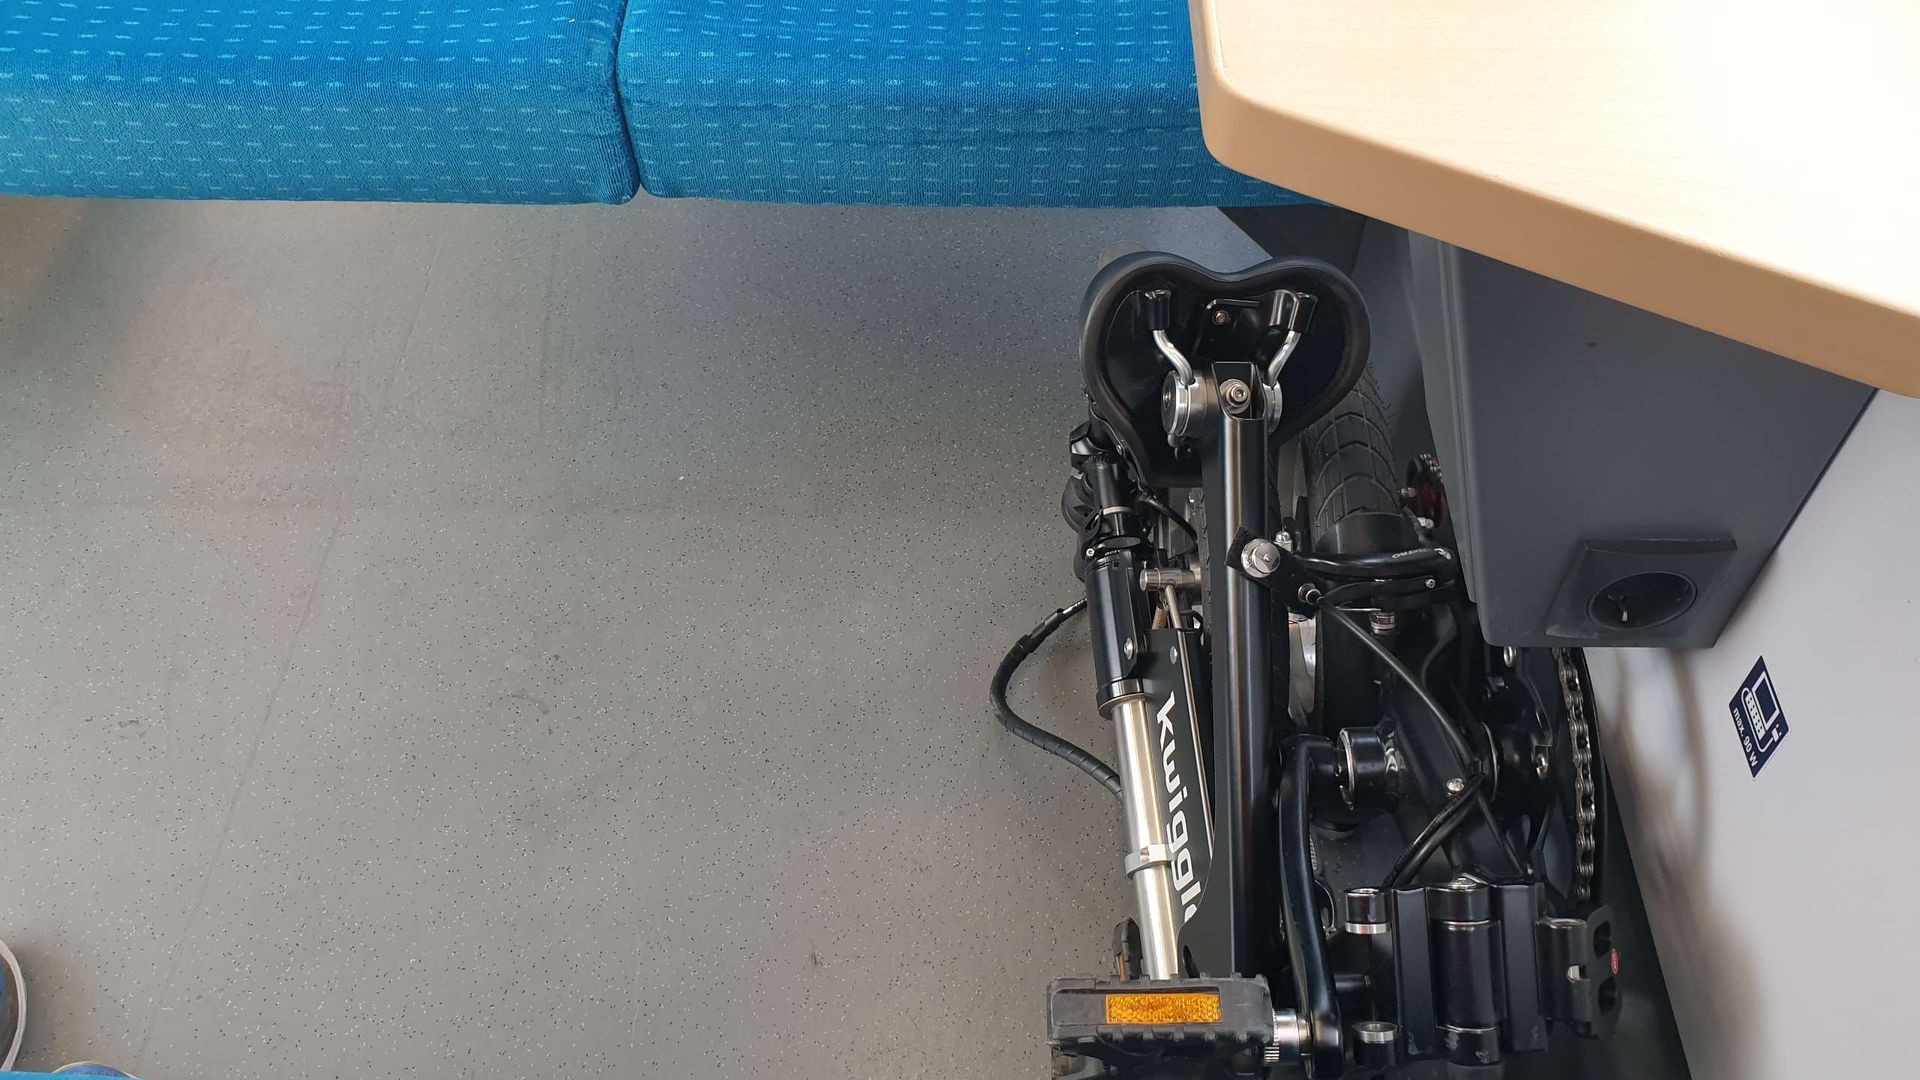 Folding-bike-Kwiggle-in-the-footwell-of-the-seat-in-the-train